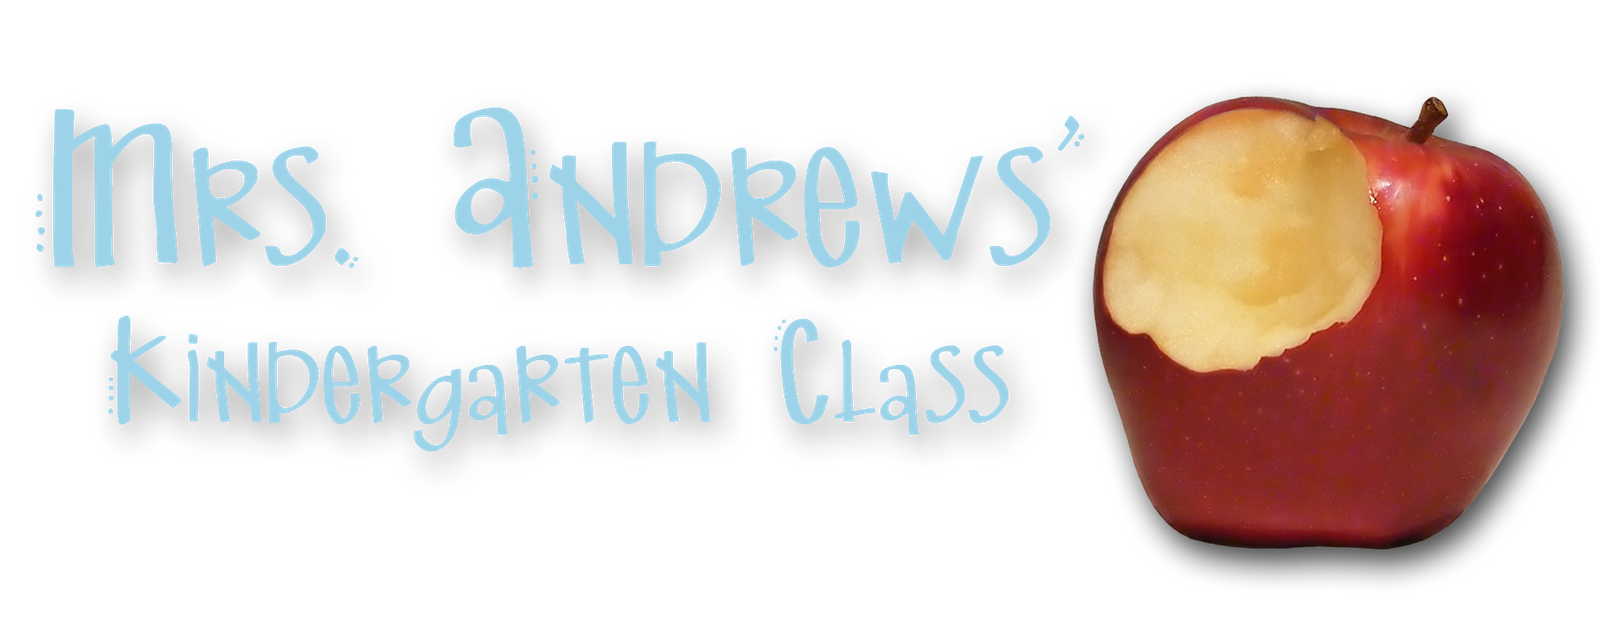 Andrews' Blog